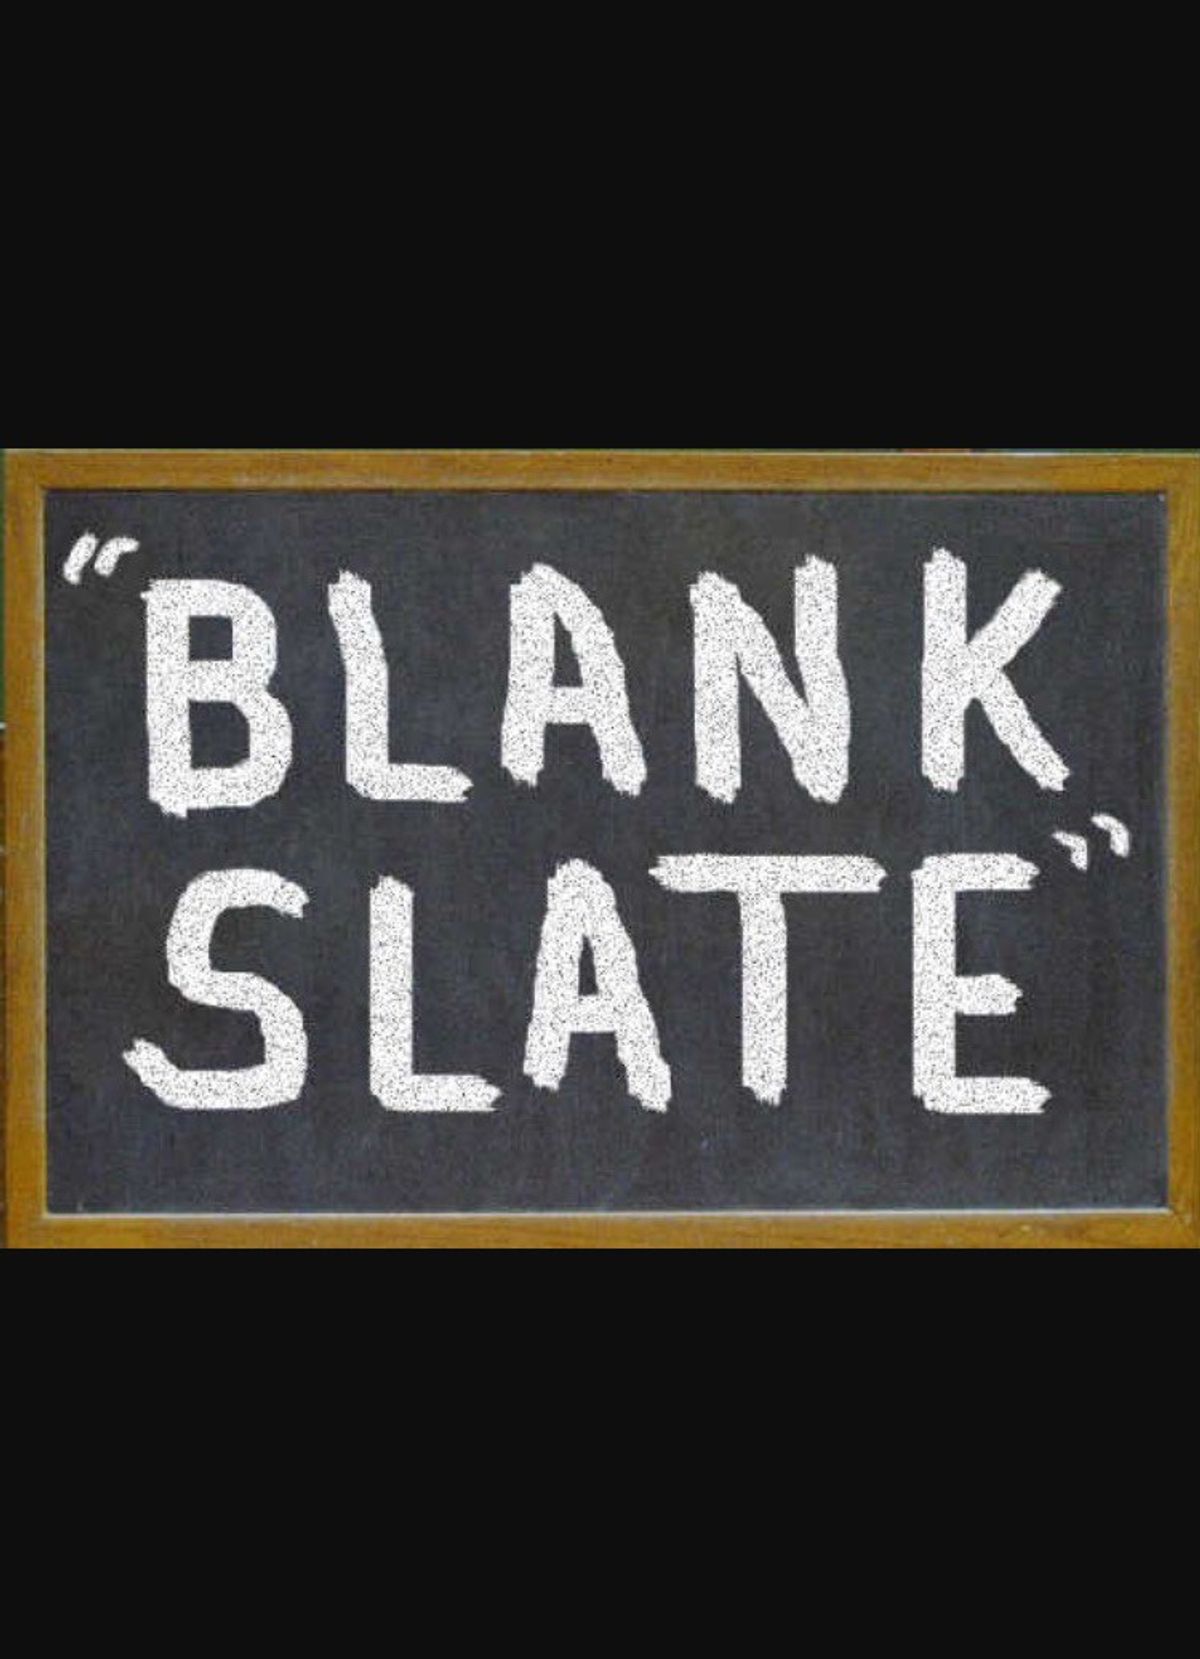 Blank Slates